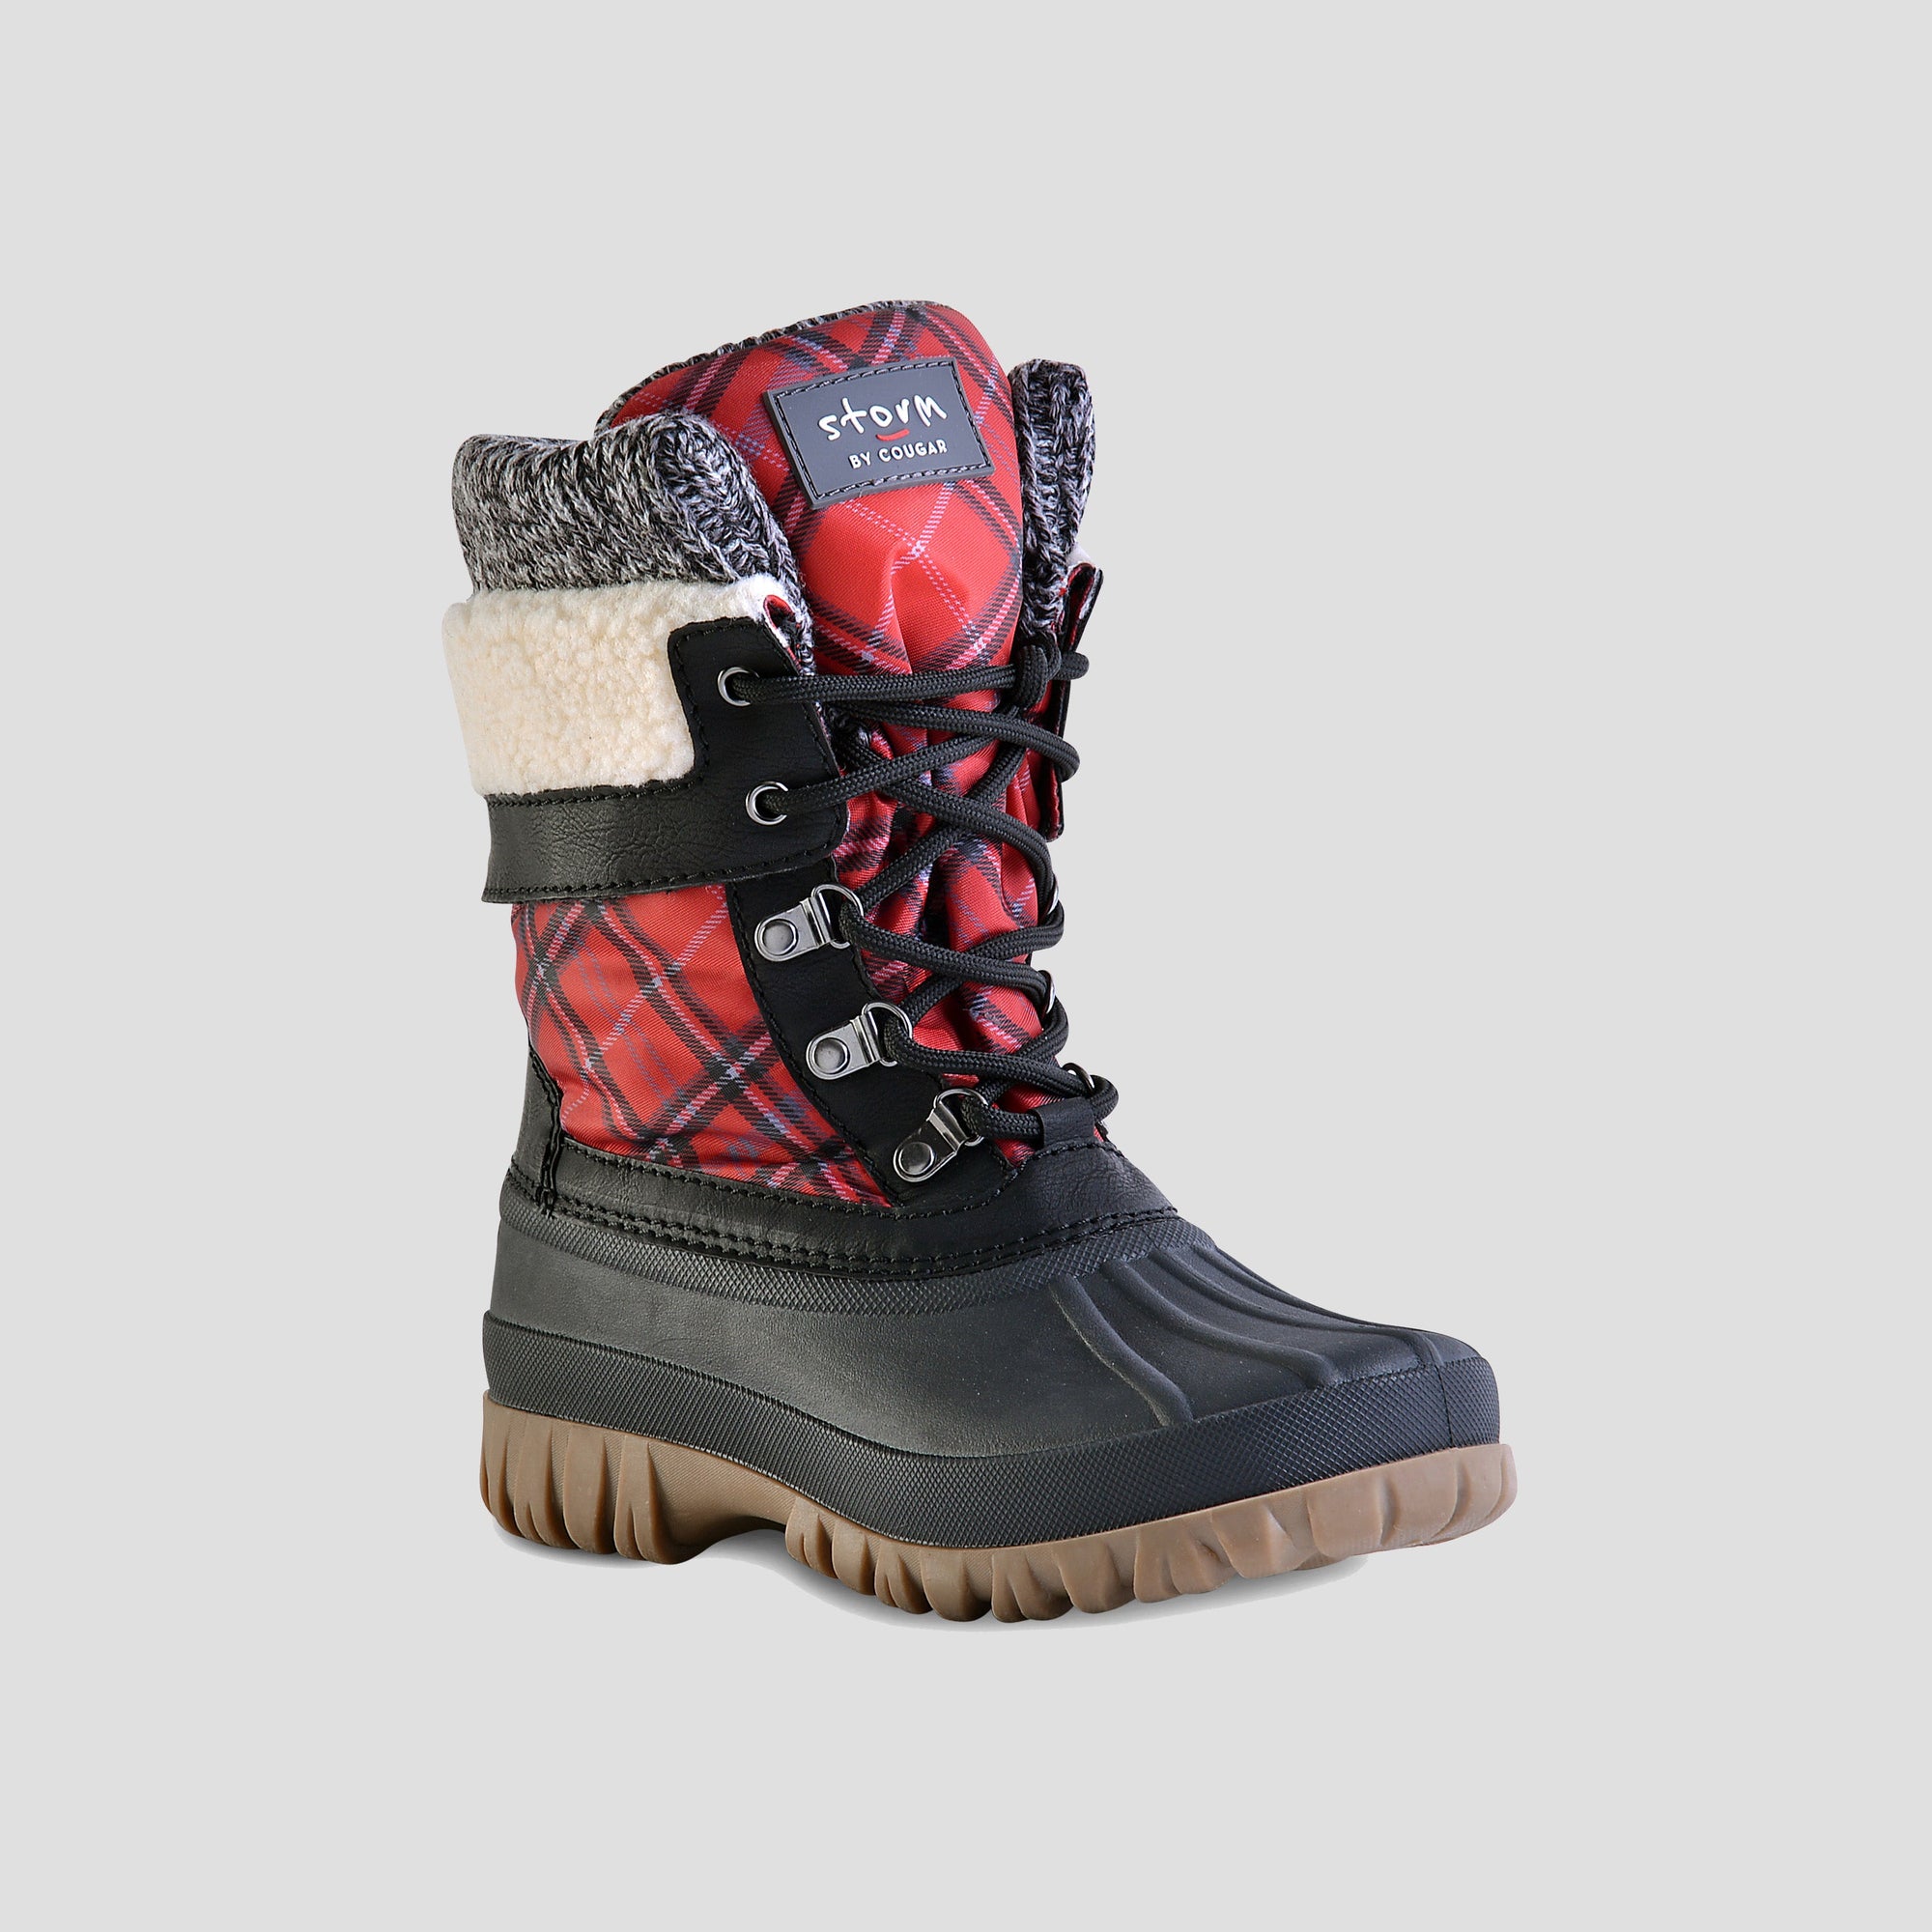 Creek Nylon Winter Boot - Color Red Check Plaid